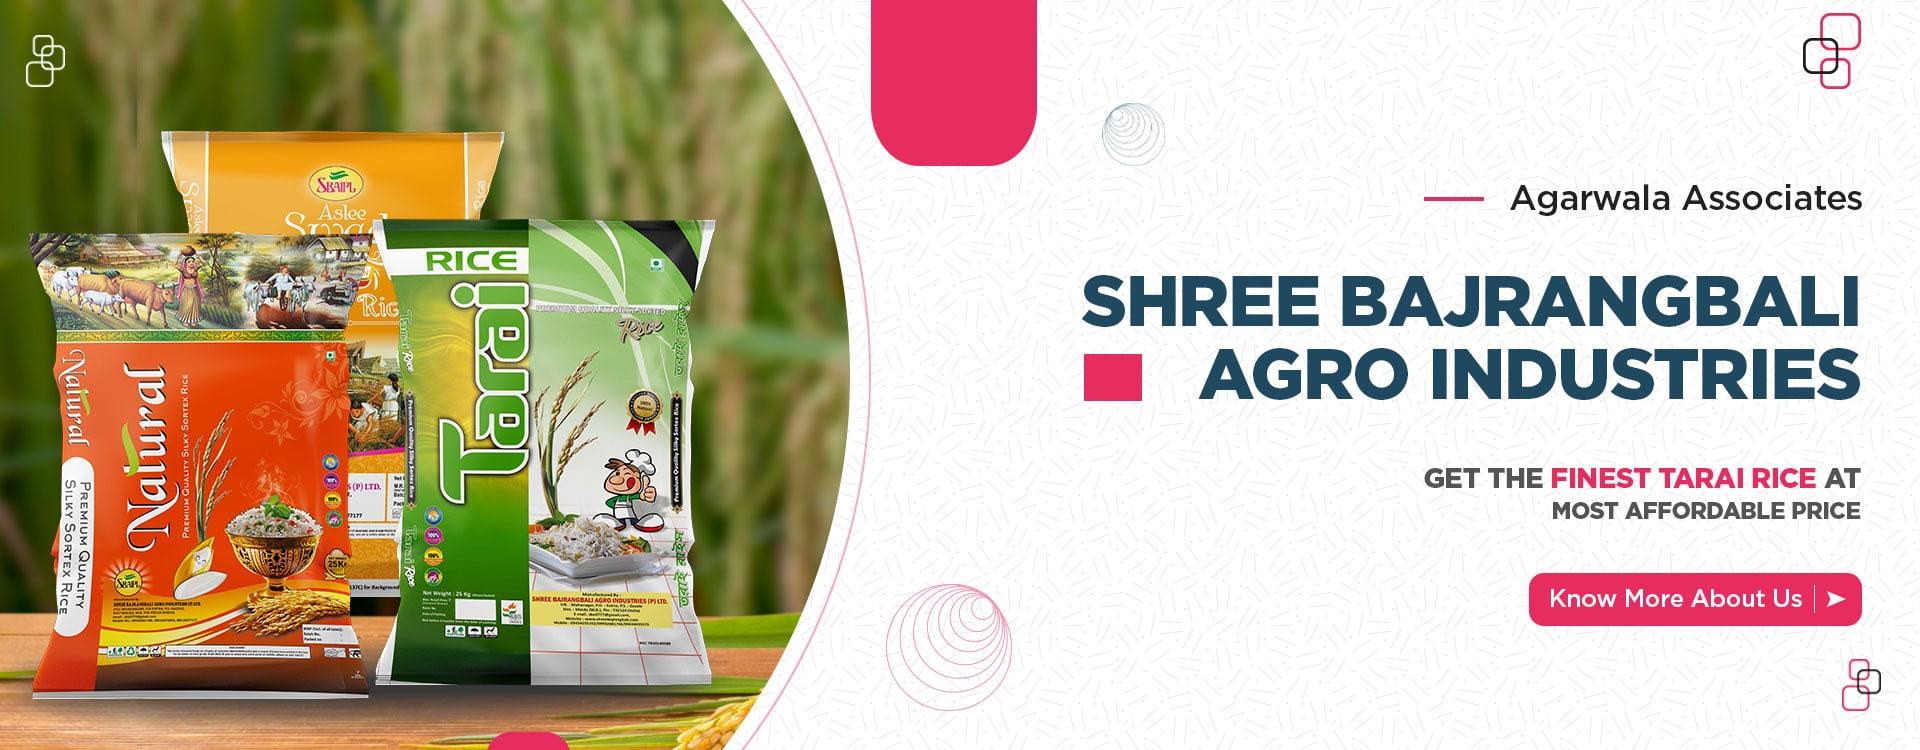 Shree Bajrangbali Agro Industries.